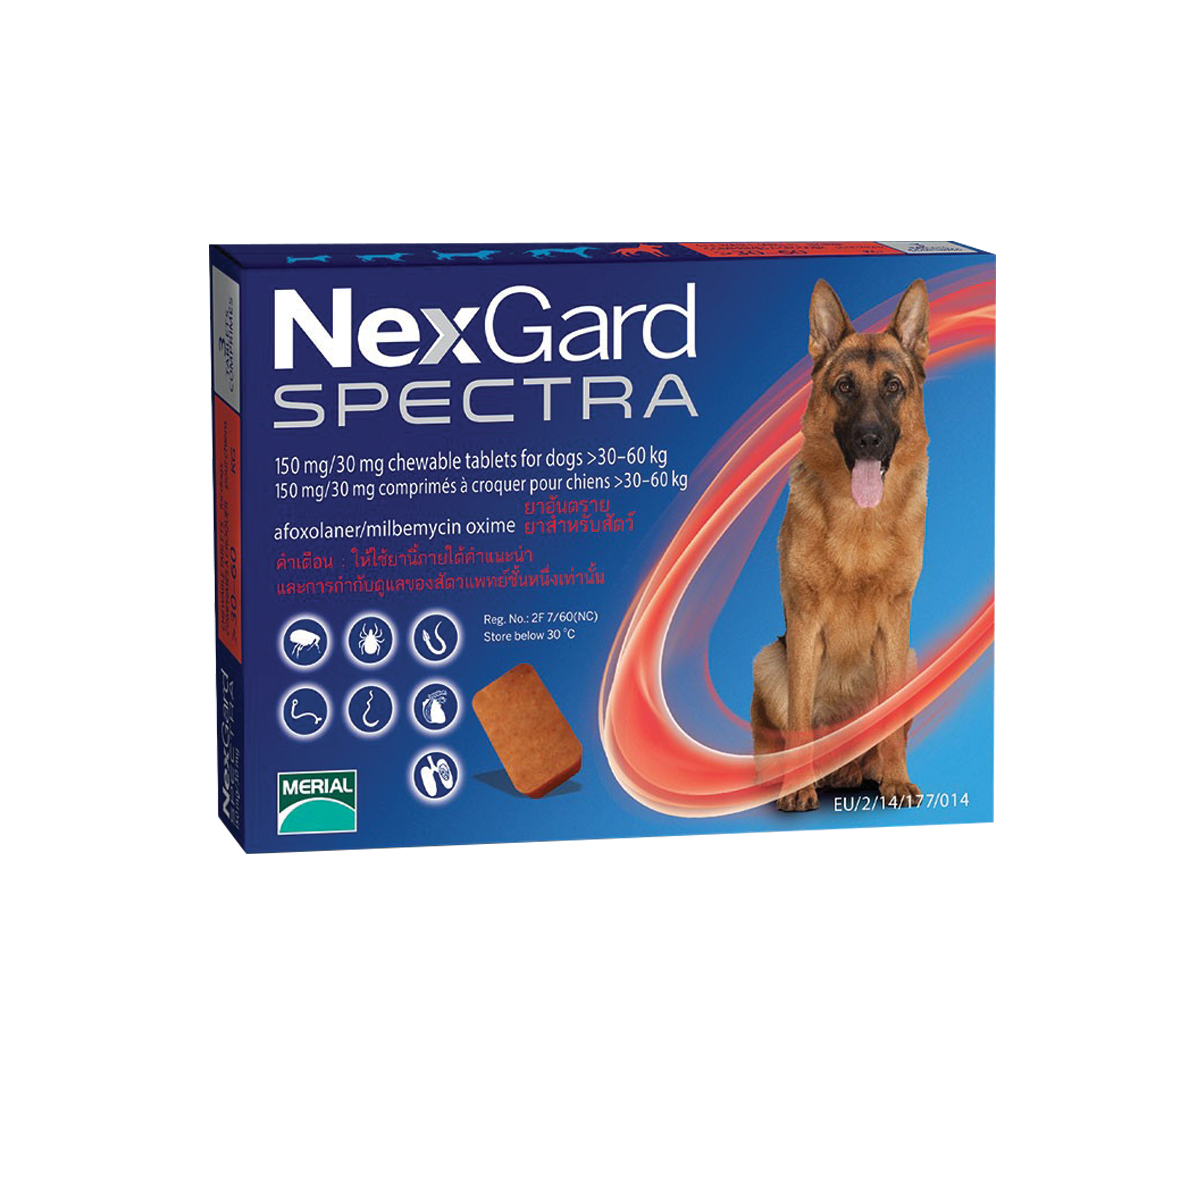 NexGard Spectra Chewable Tablets for Extra Large Dogs เน็กการ์ด สเป็คต้าร์ ยากำจัดเห็บ หมัด สุนัข ชนิดเม็ดเคี้ยว สำหรับสุนัขที่มีน้ำหนัก 30-60 กิโลกรัม